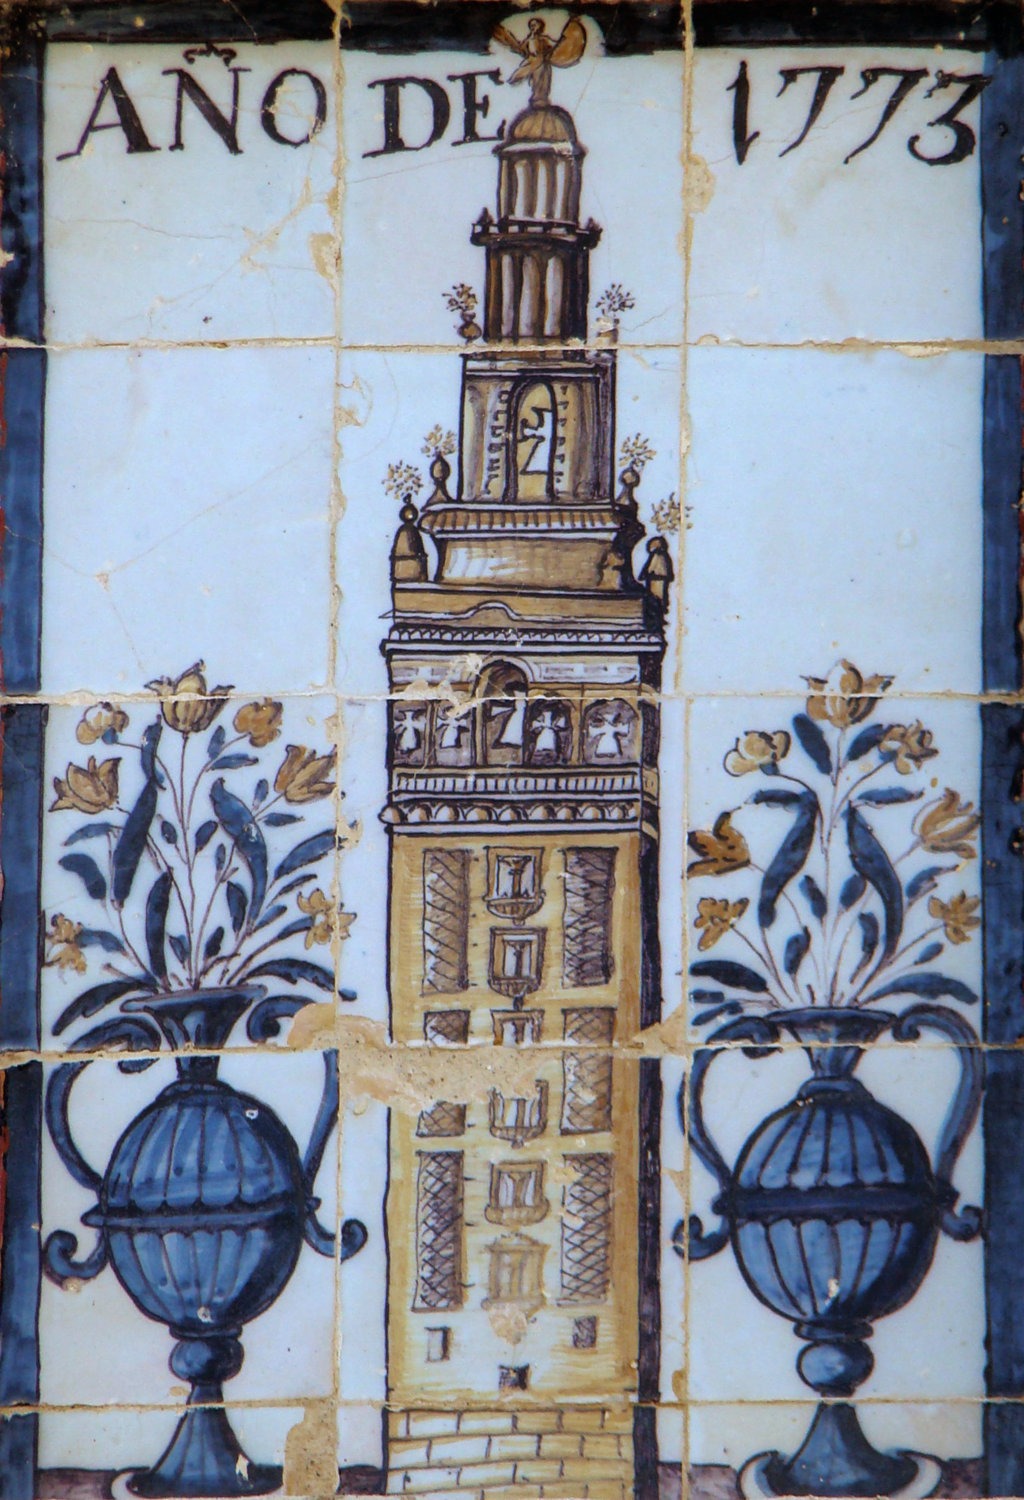 00106. Panel de azulejos. Heráldica del Cabildo Catedral de Sevilla. Casa de la Cilla. Marchena. Sevilla.